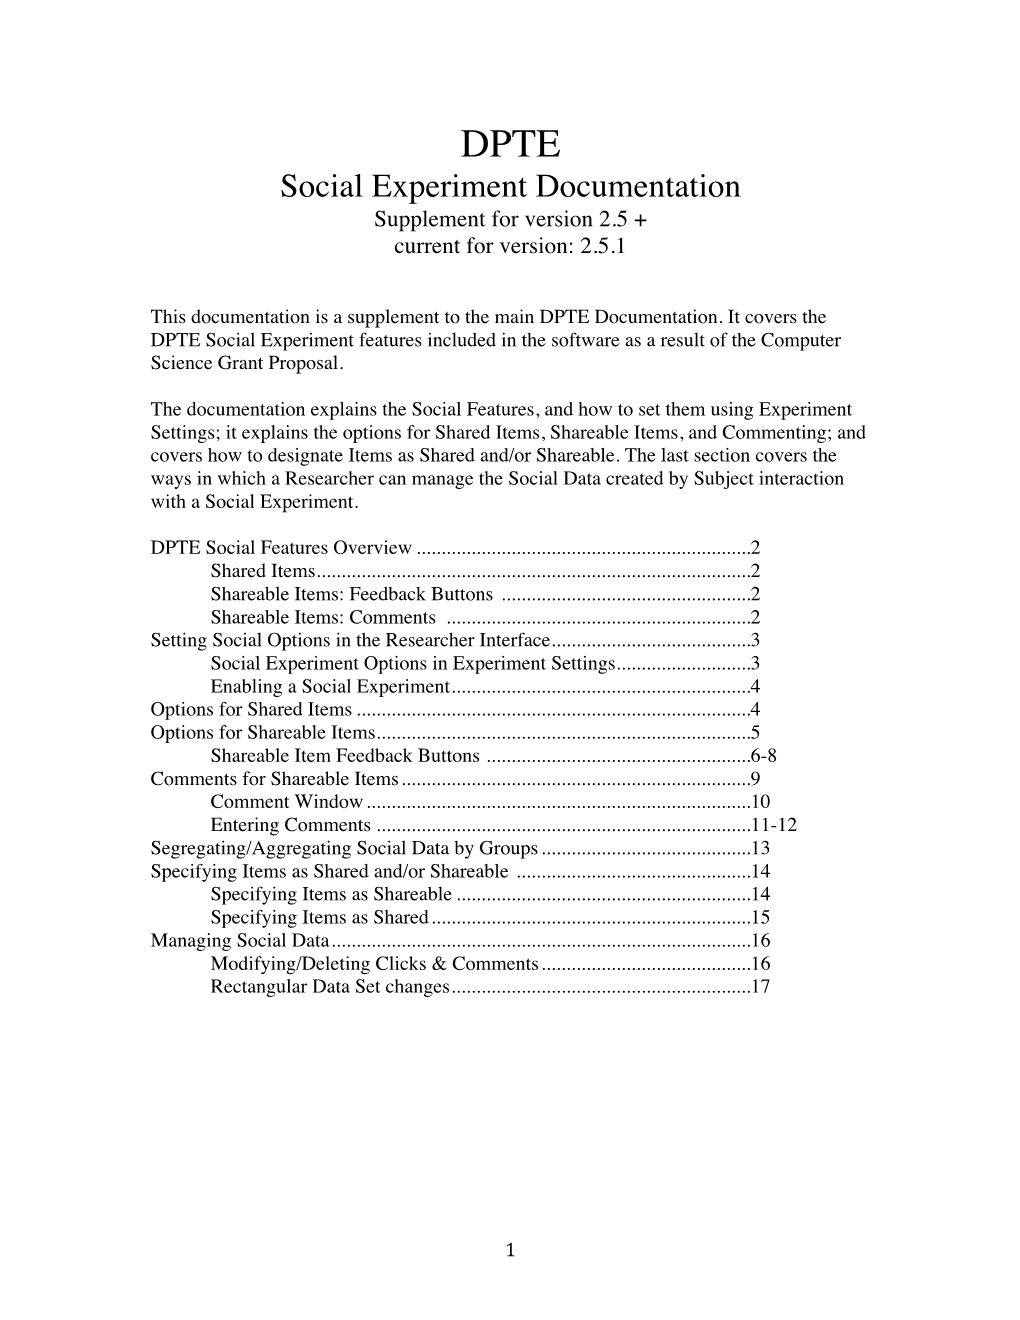 DPTE Social Experiment Documentation Supplement for Version 2.5 + Current for Version: 2.5.1